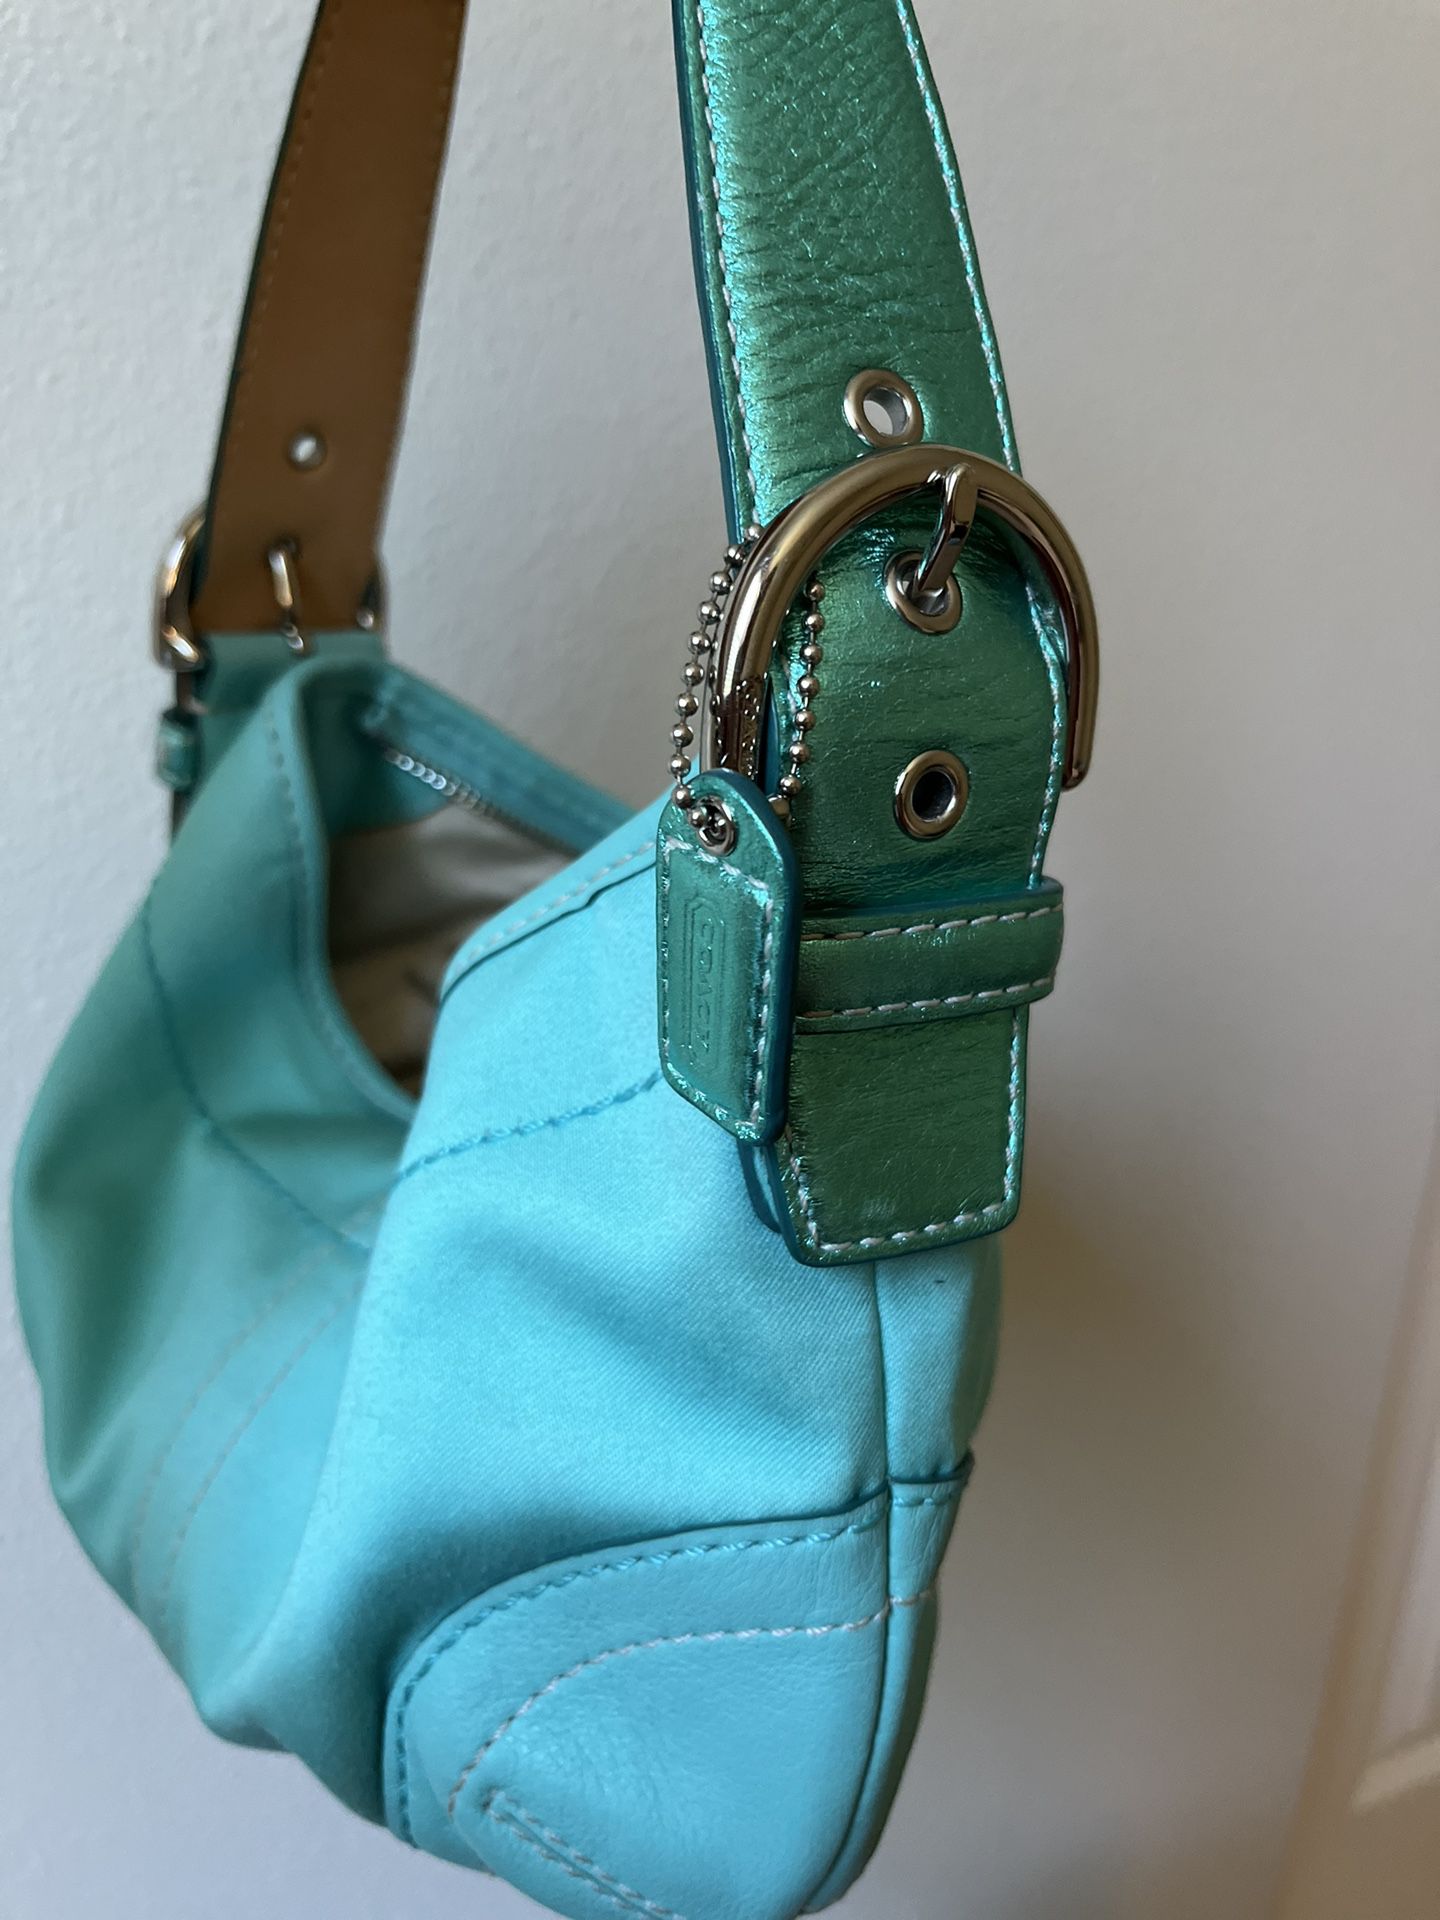 Coach Leather Mini Serena Crossbody Bag for Sale in Anaheim, CA - OfferUp